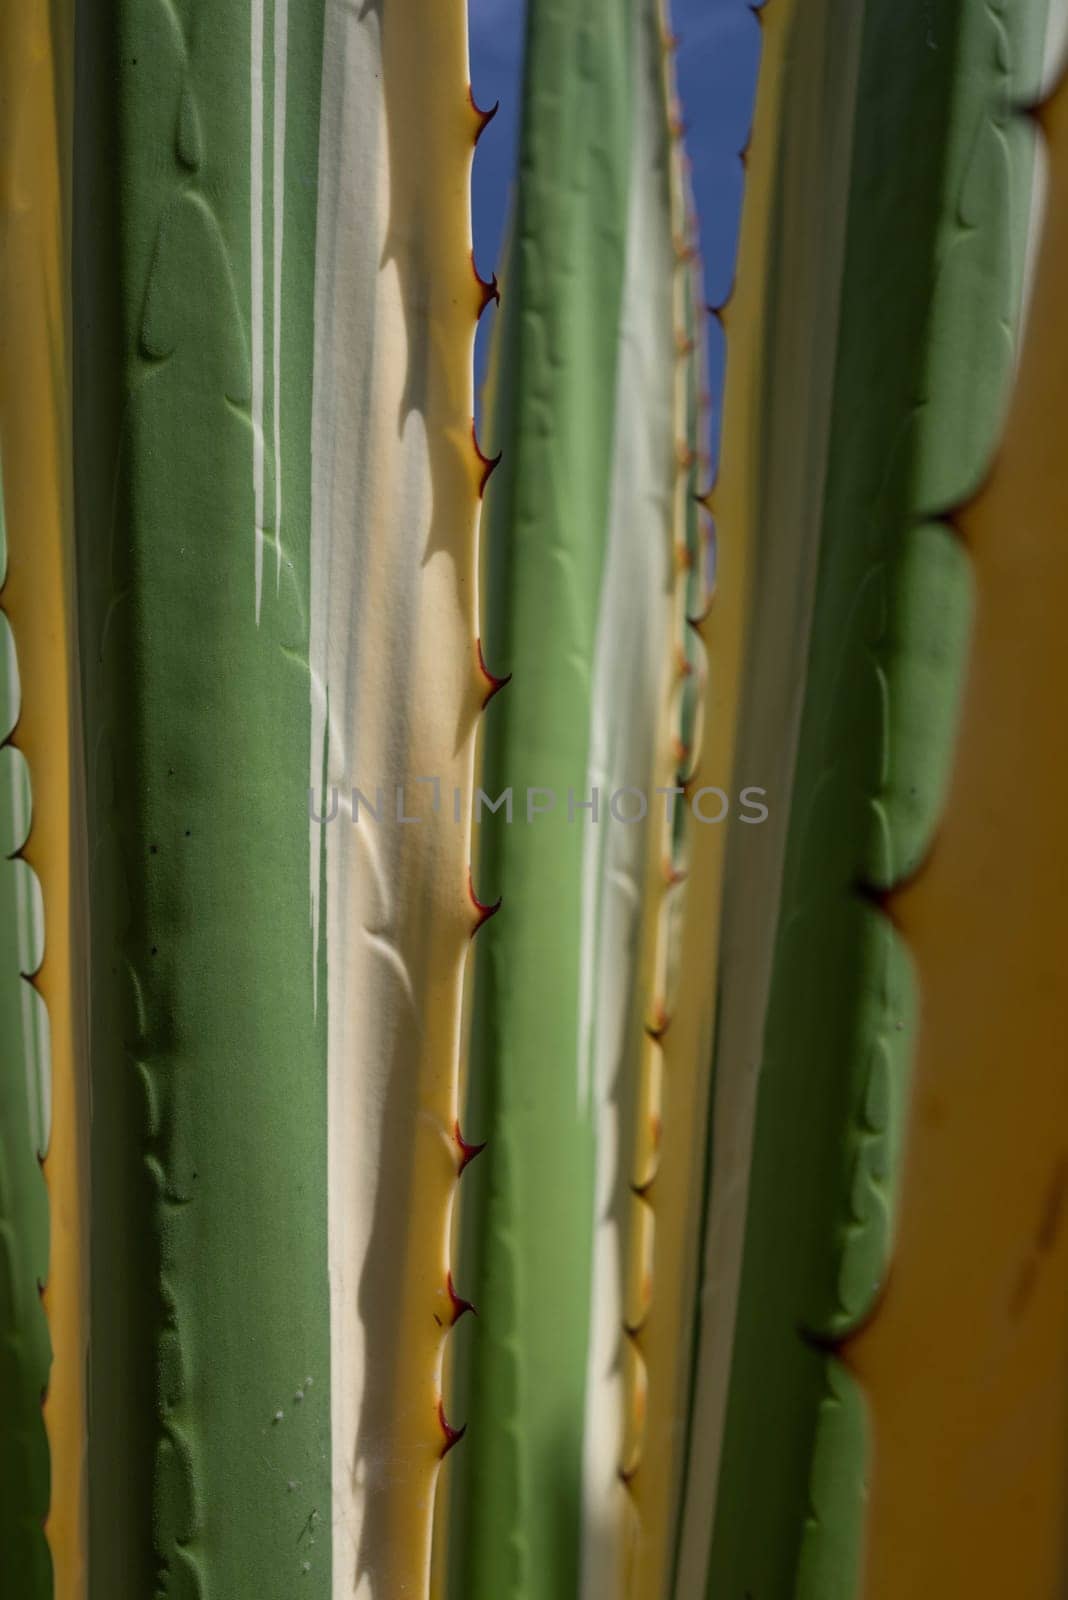 Variegated Spanish Dagger or yucca gloriosa variegata. Green and yellow stripes by amovitania